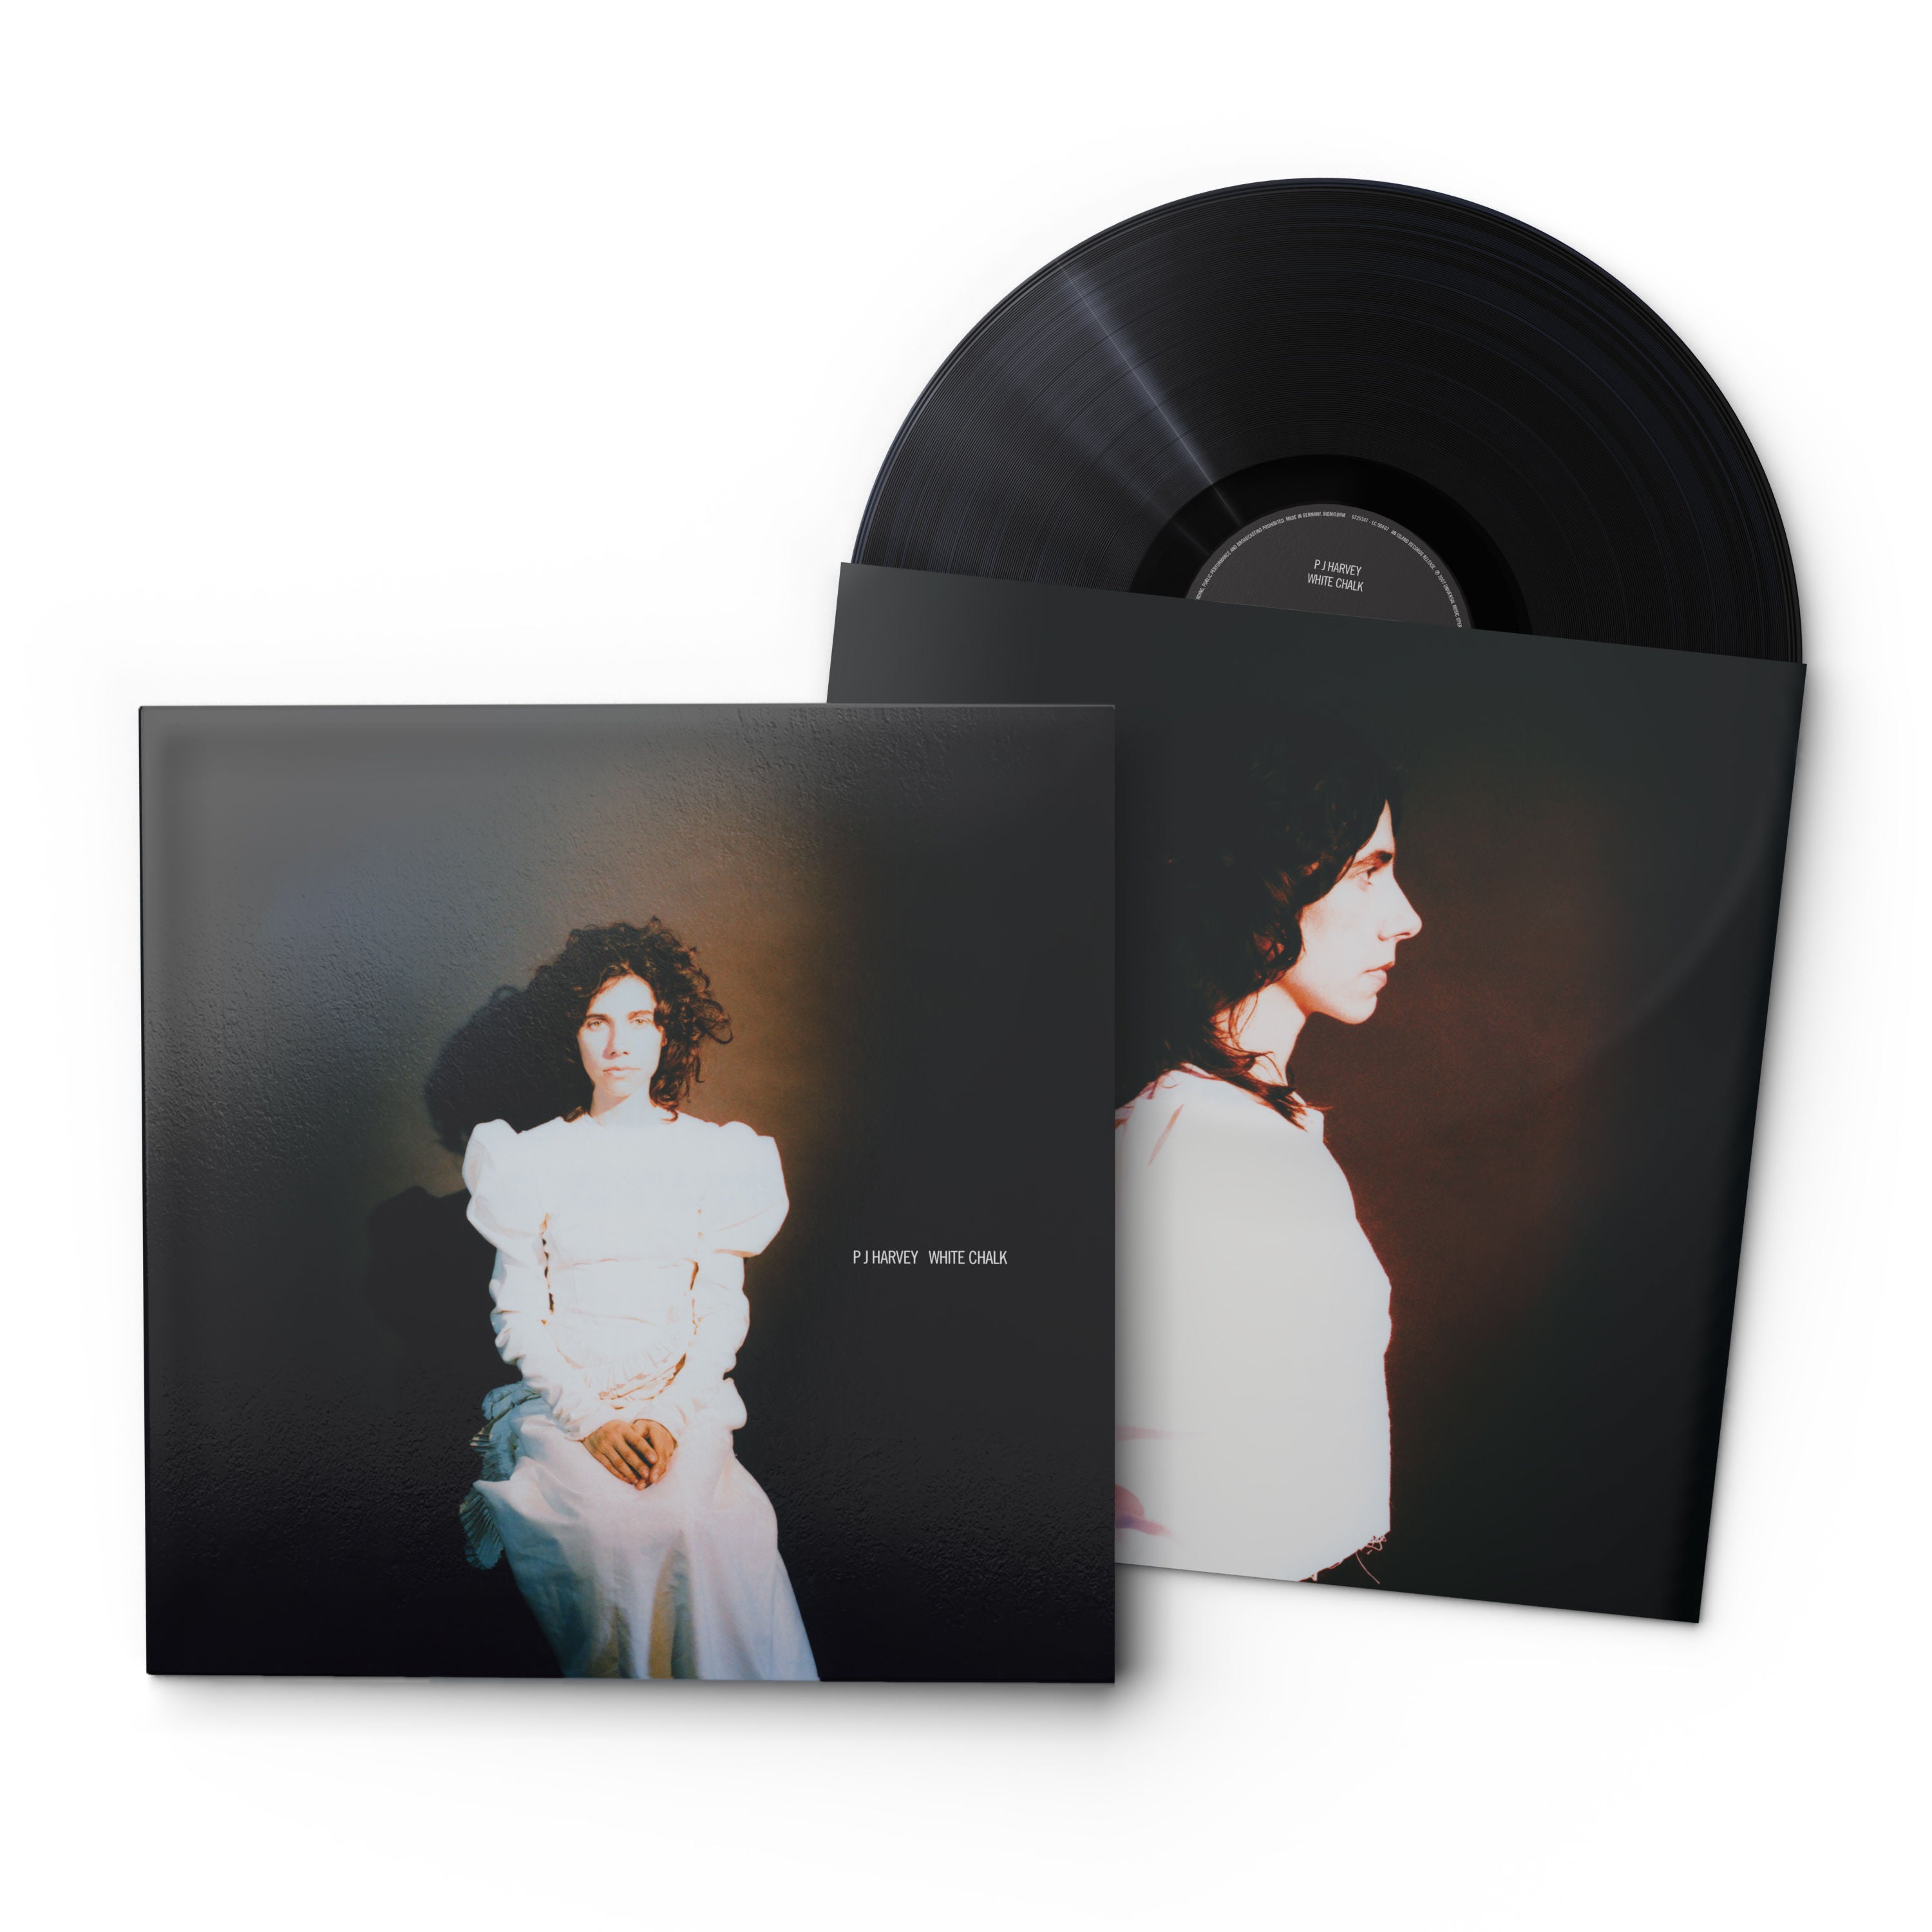 PJ Harvey - White Chalk: Vinyl LP